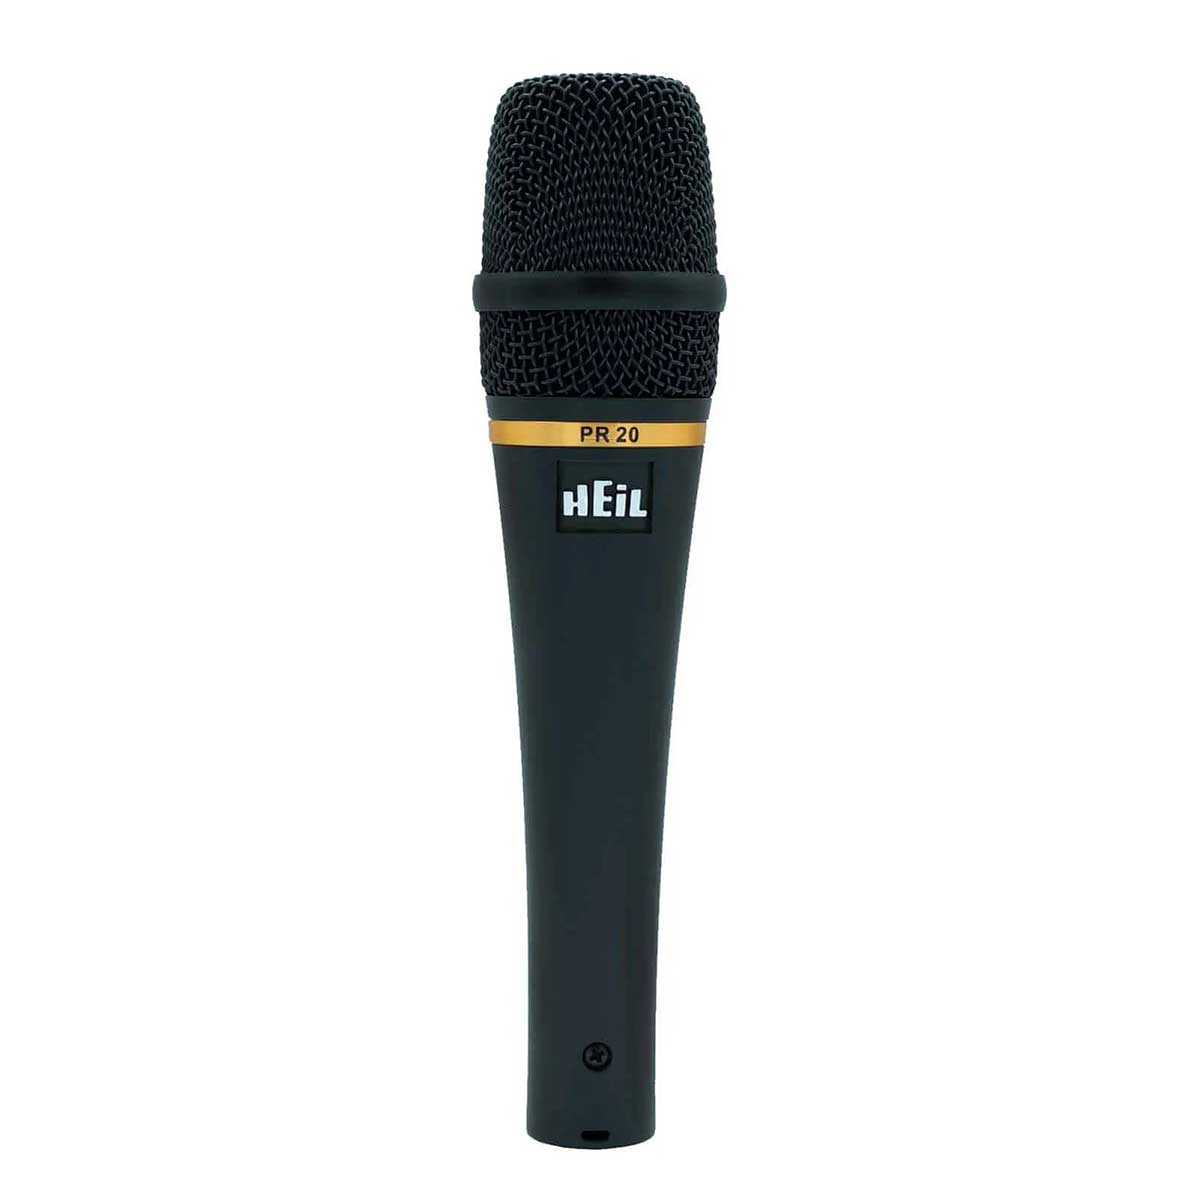 Heil PR 20 Dynamic Microphone